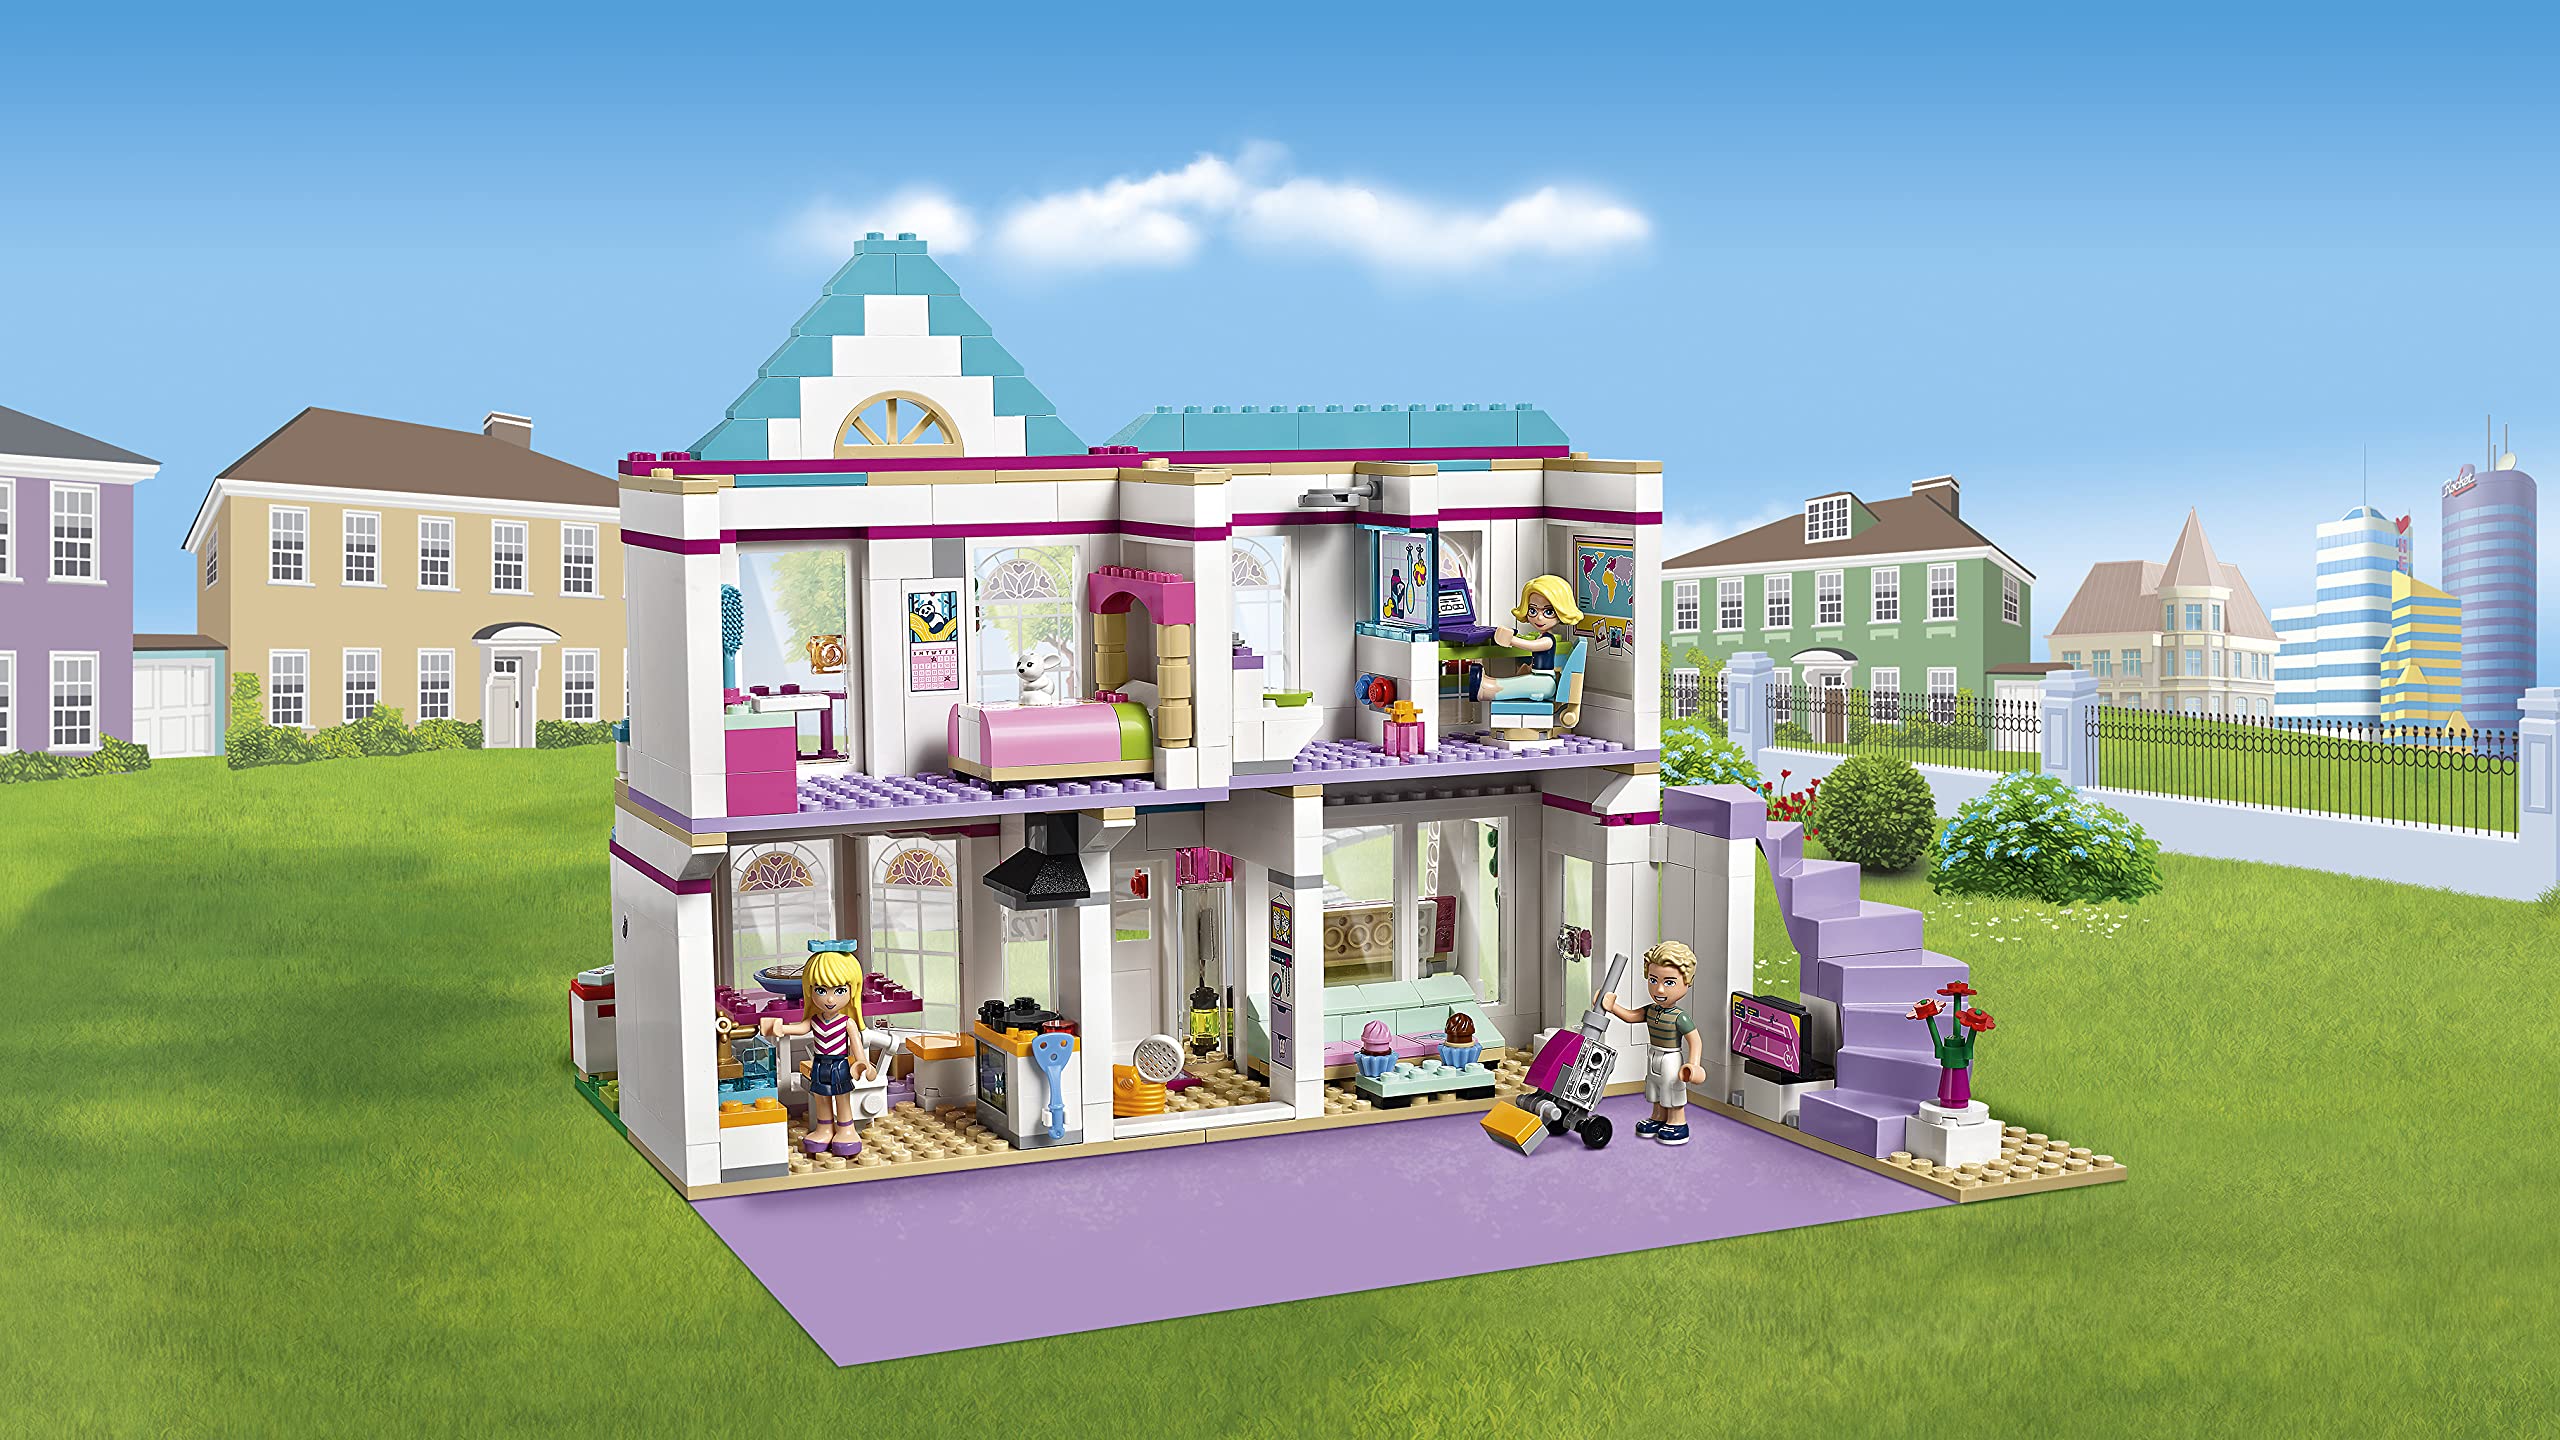 Original - 1 Pack - LEGO Friends Stephanie's House 41314 Building Kit